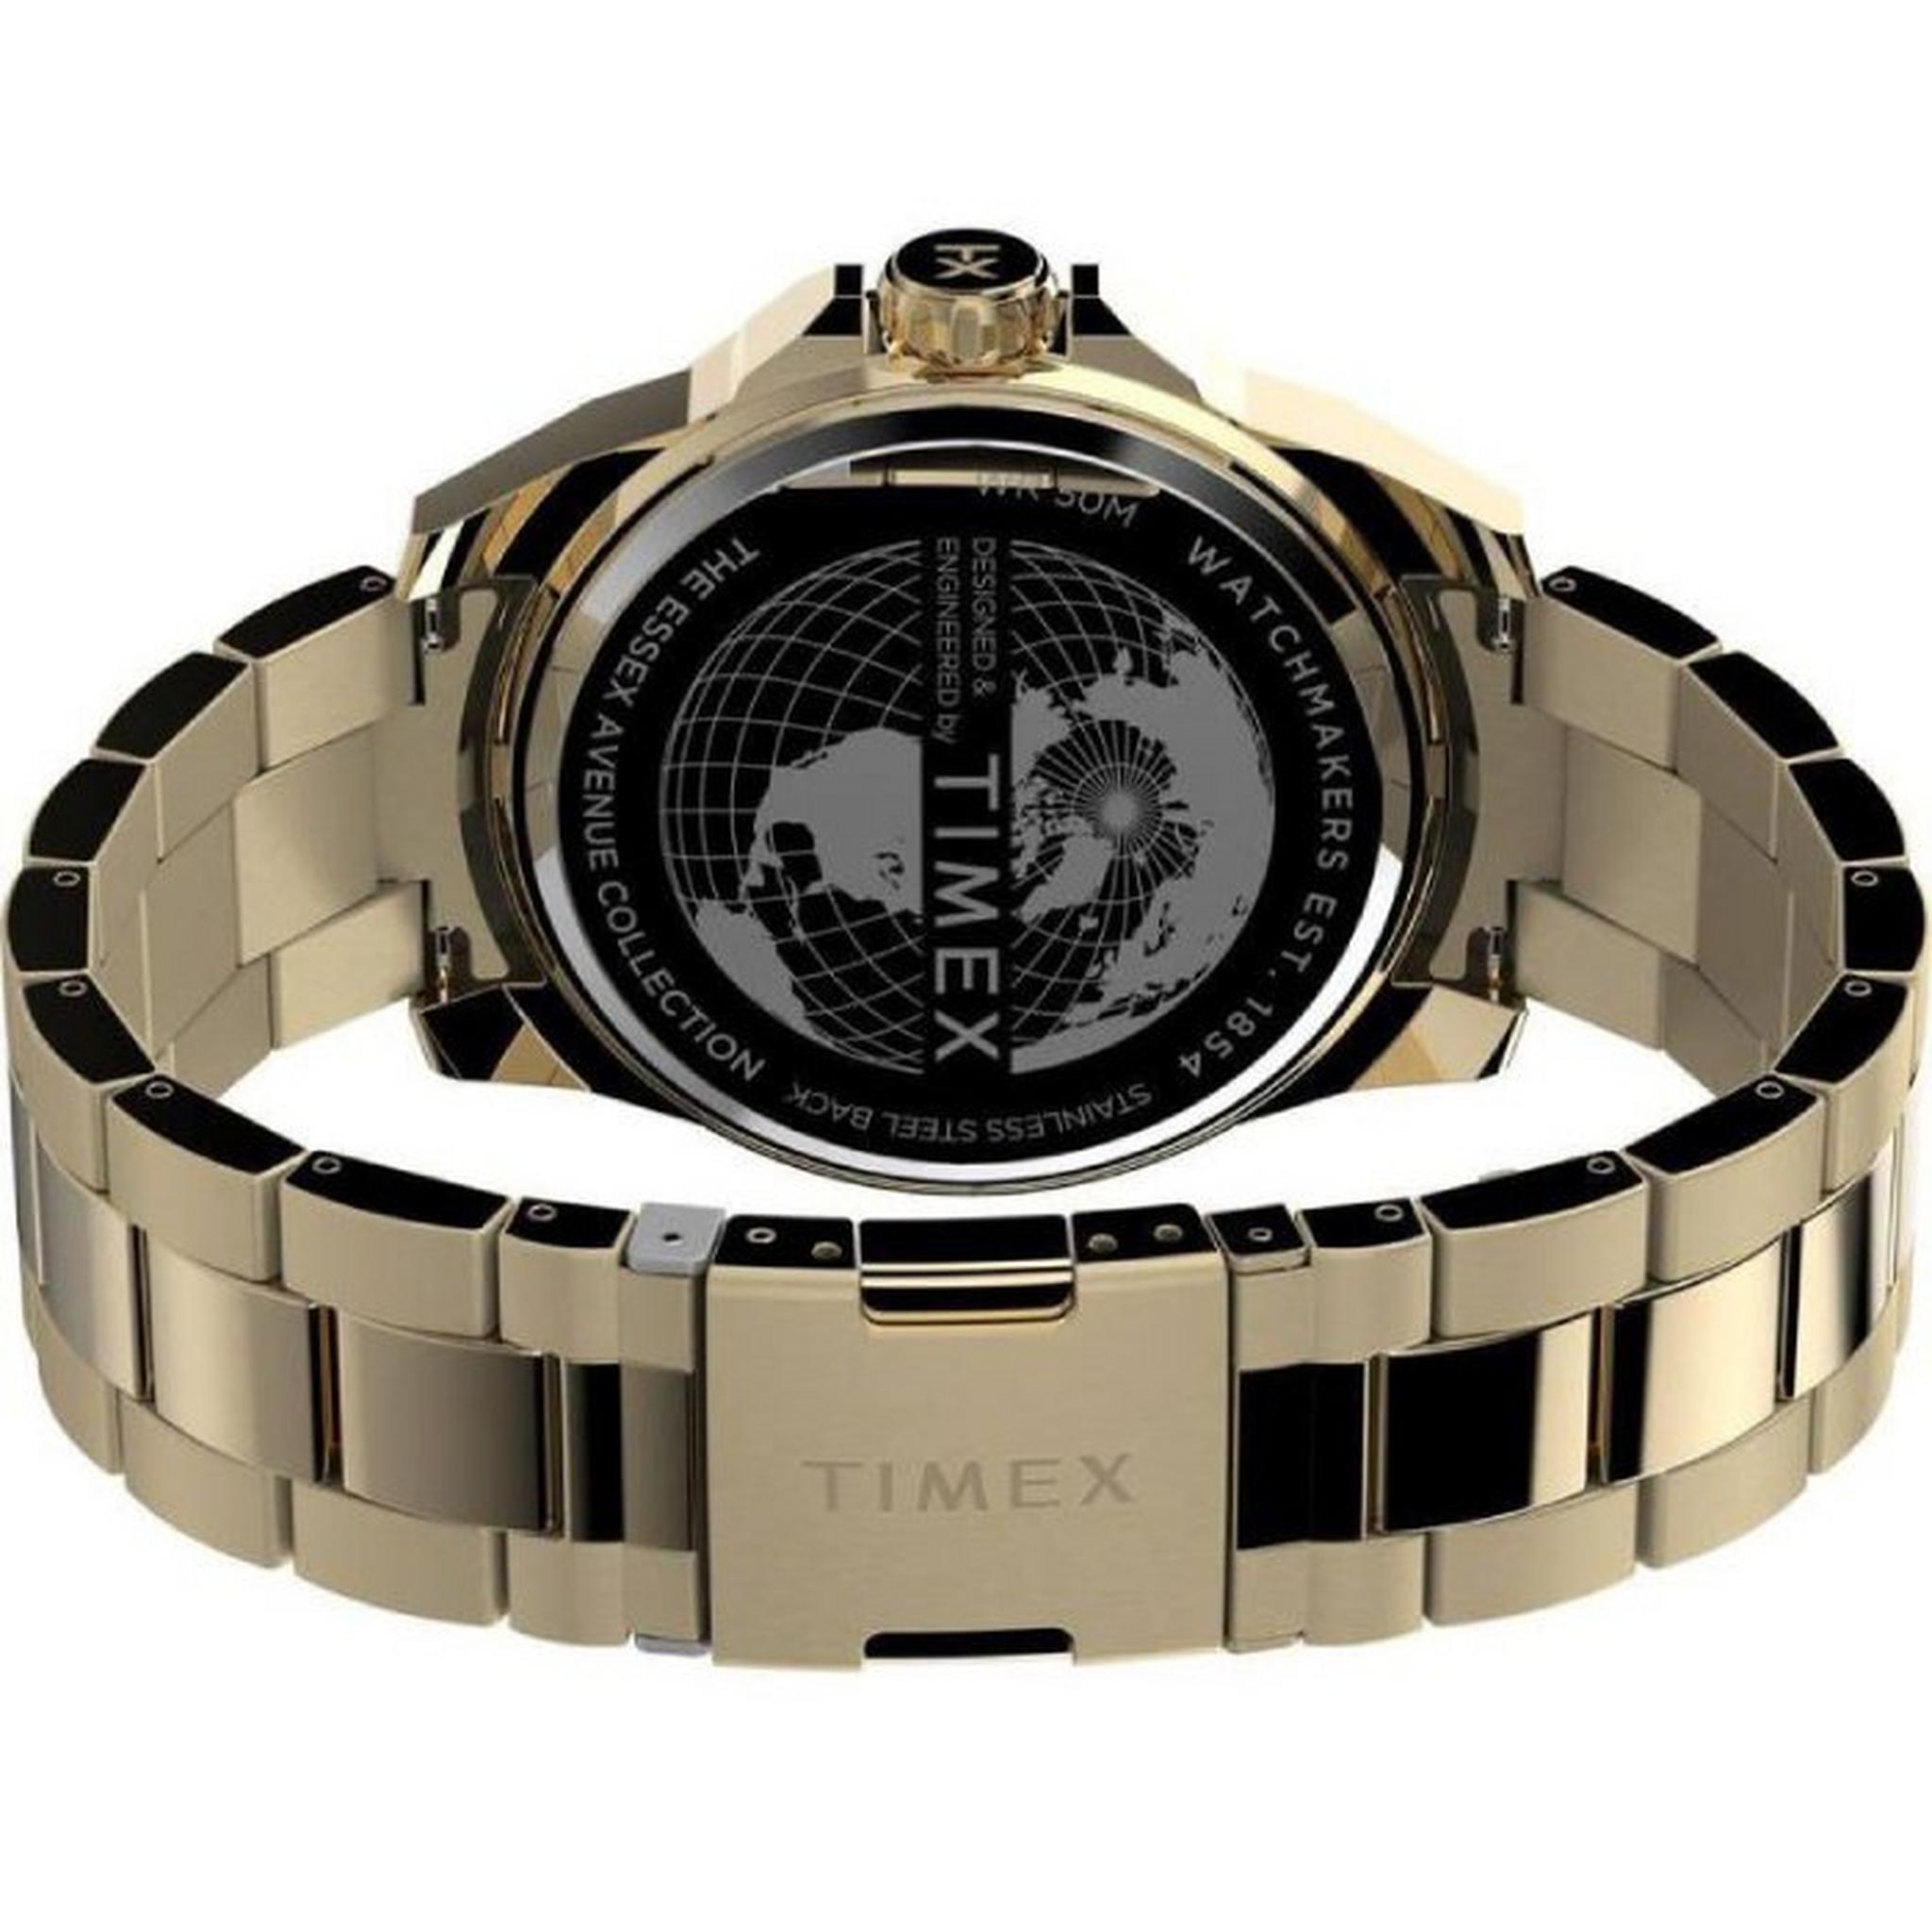 Timex Essex Men’s Watch, 46mm, Stainless Steel Strap, Analog, TW2W13800 – Gold